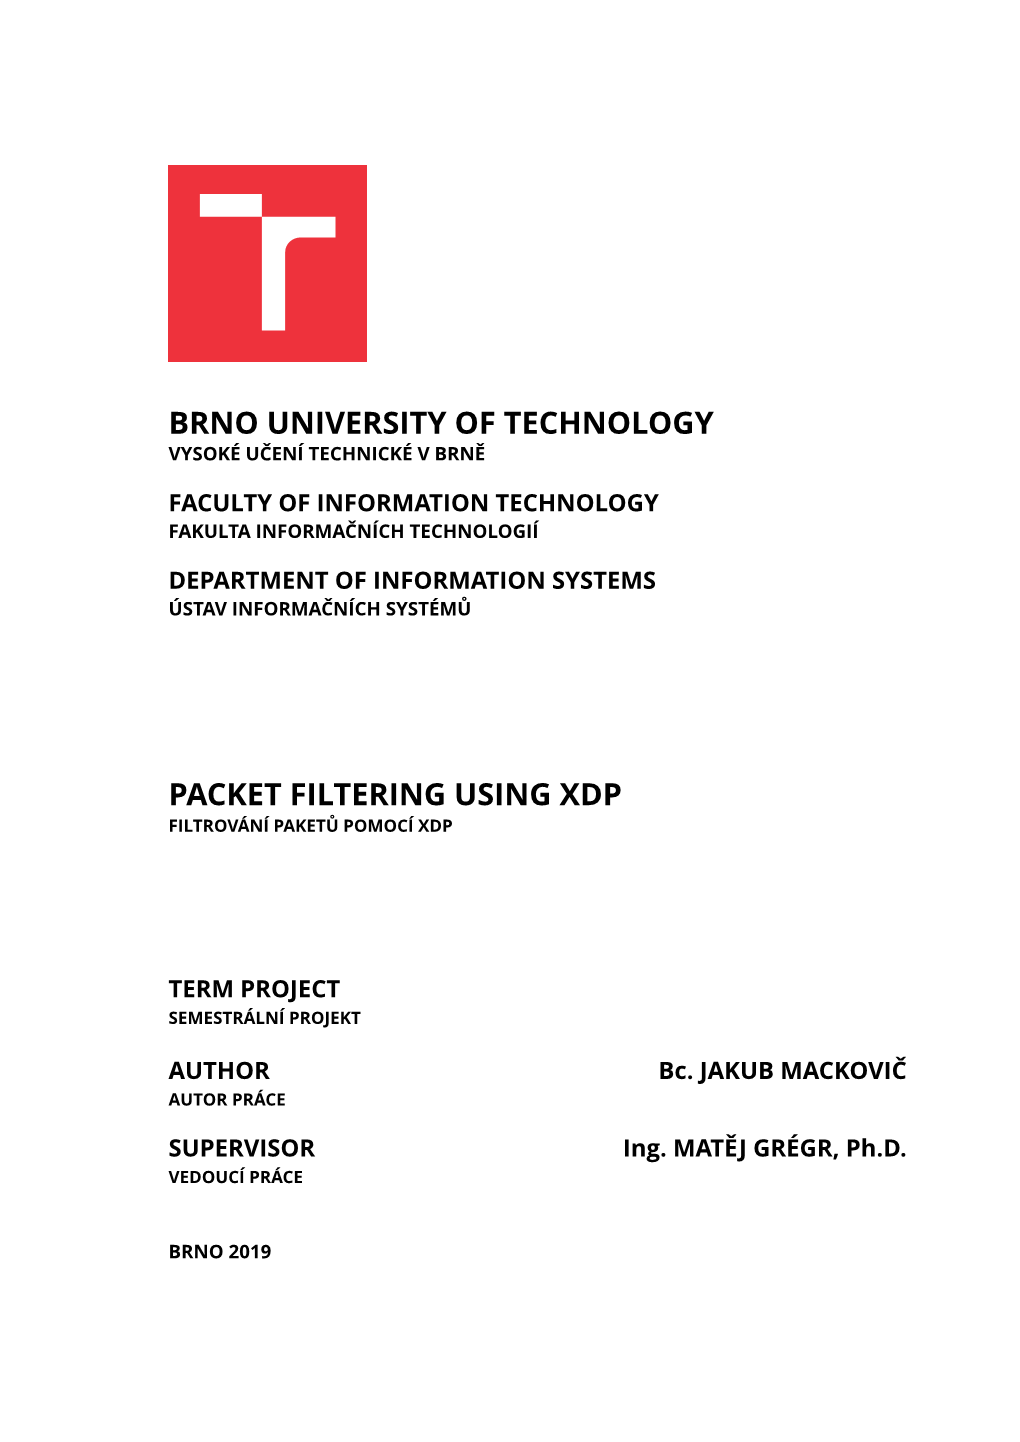 Brno University of Technology Packet